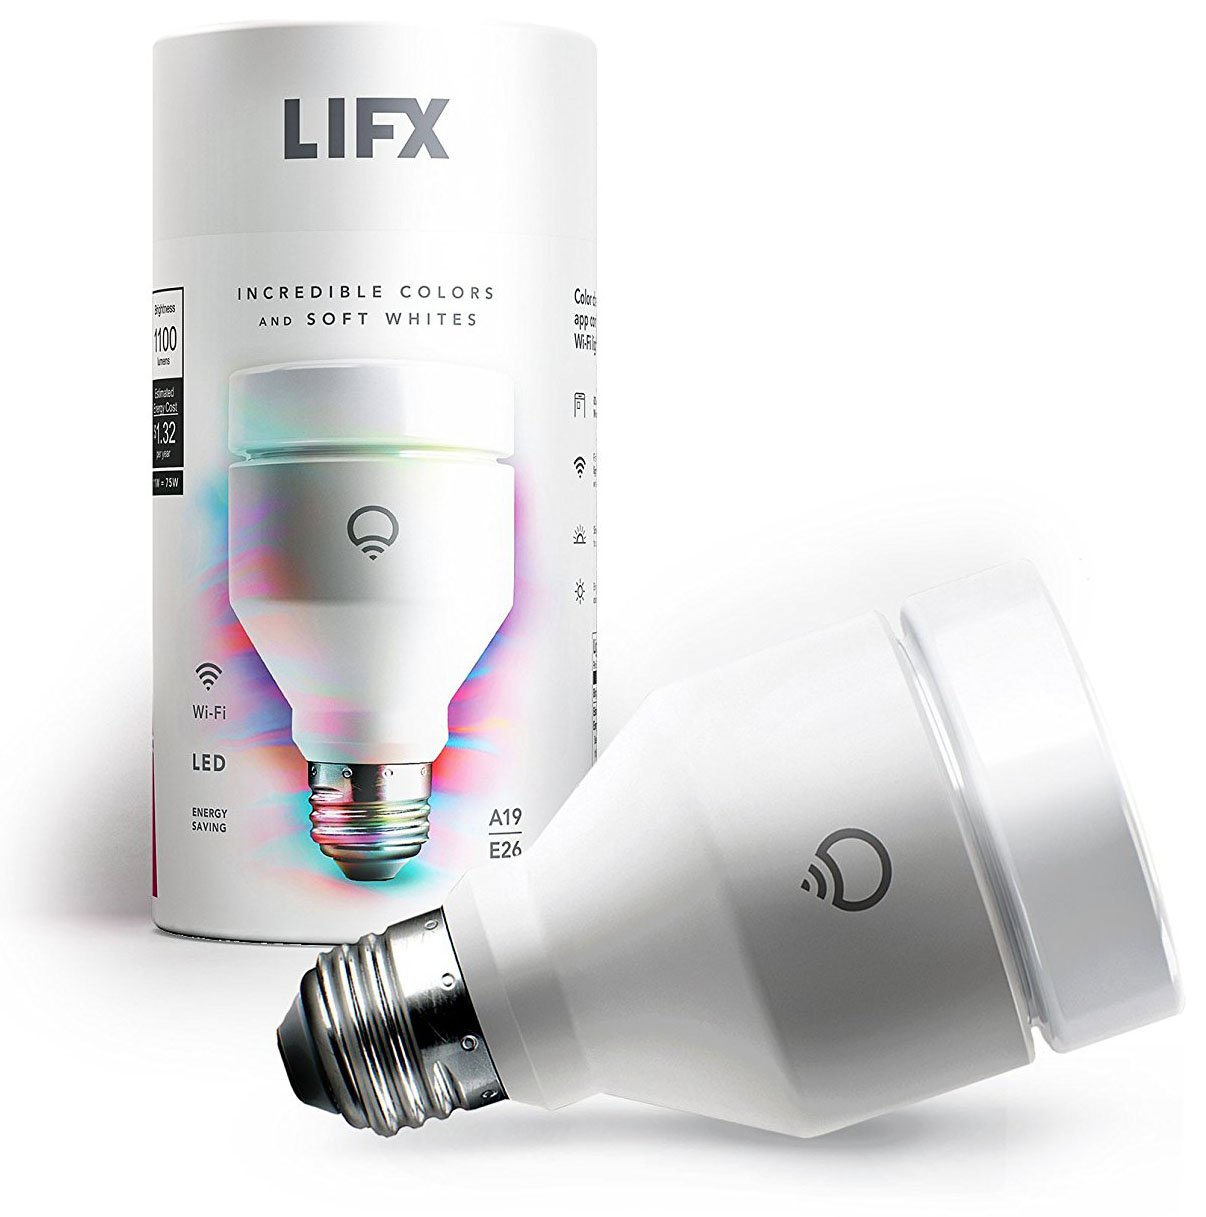 LIFX light bulb